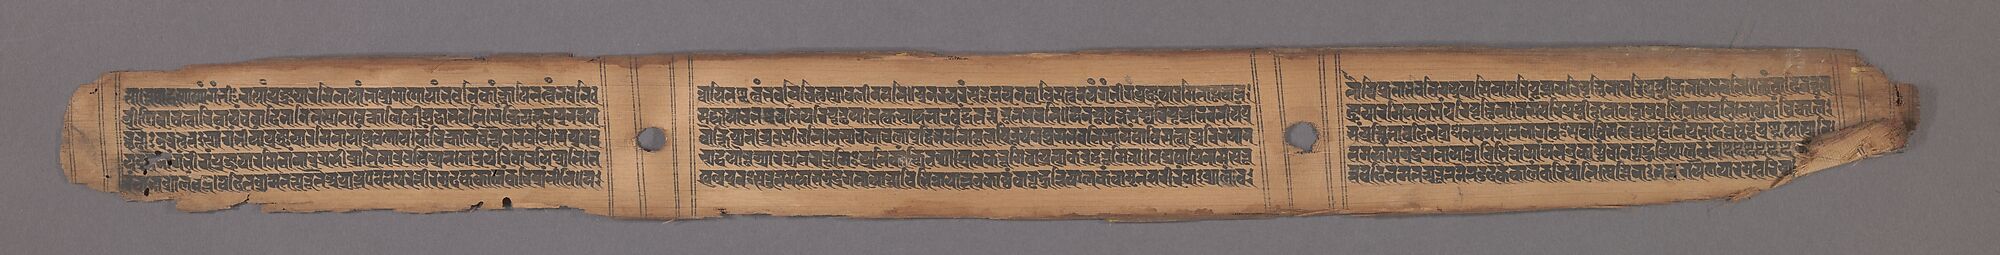 Folio from a Manuscript of the Ashtasahasrika Prajnaparamita (Perfection of Wisdom)